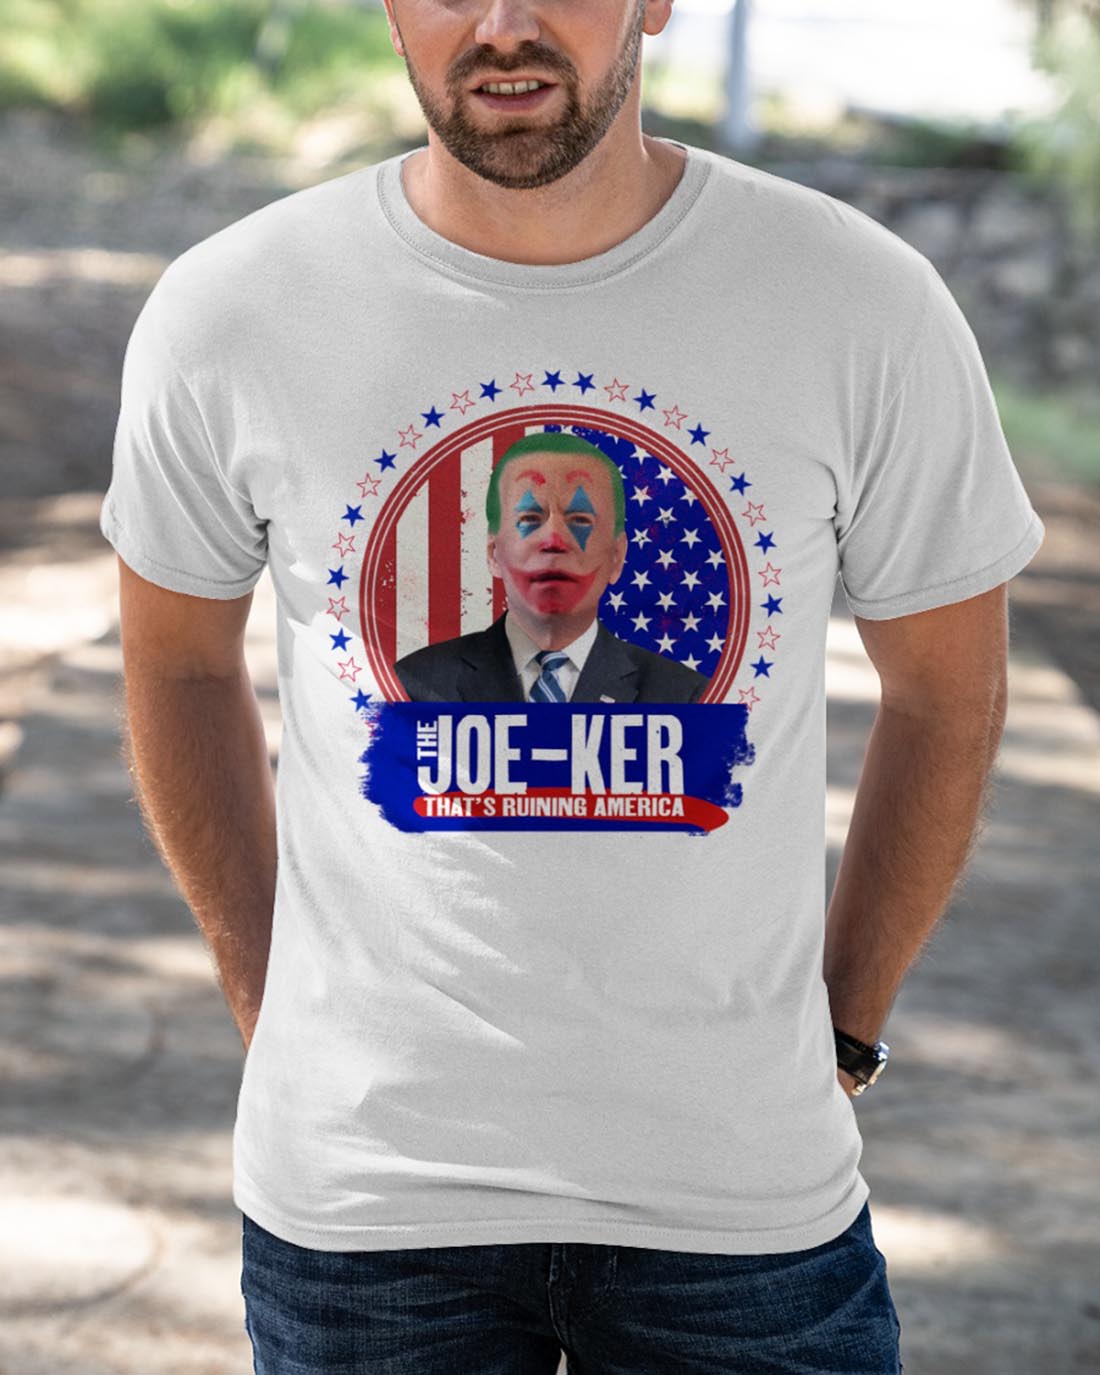 The-Joe-ker-Thats-ruining-America-shirt-1